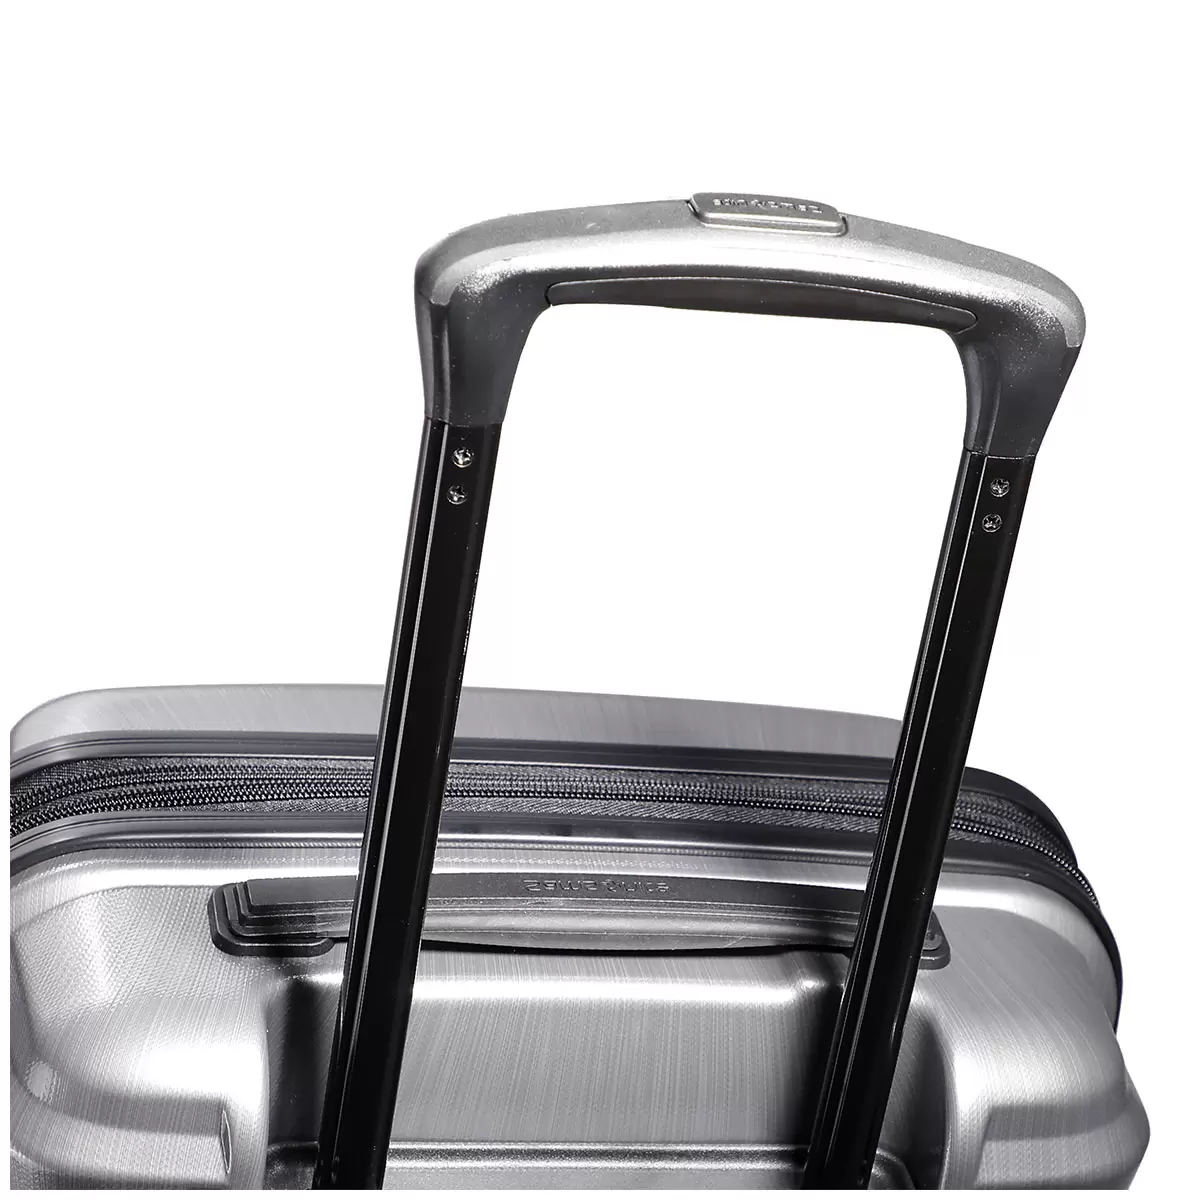 Samsonite Zipplus Carry On Luggage Silver